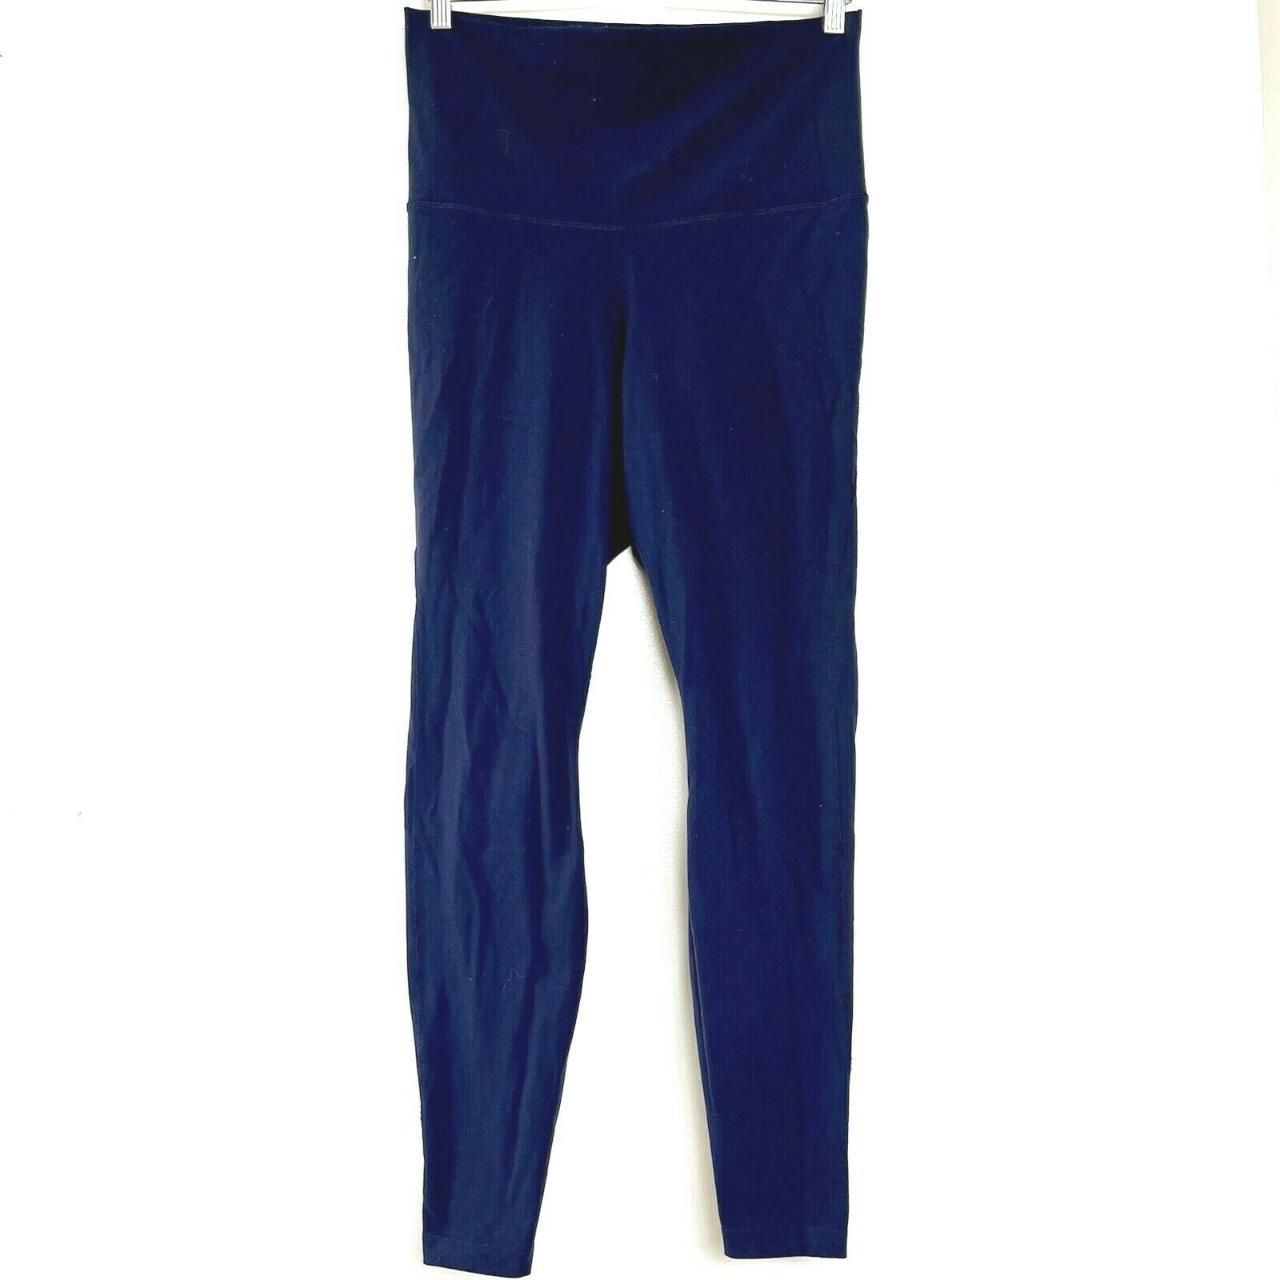 Nike dri-fit navy blue leggings! - high rise - in - Depop